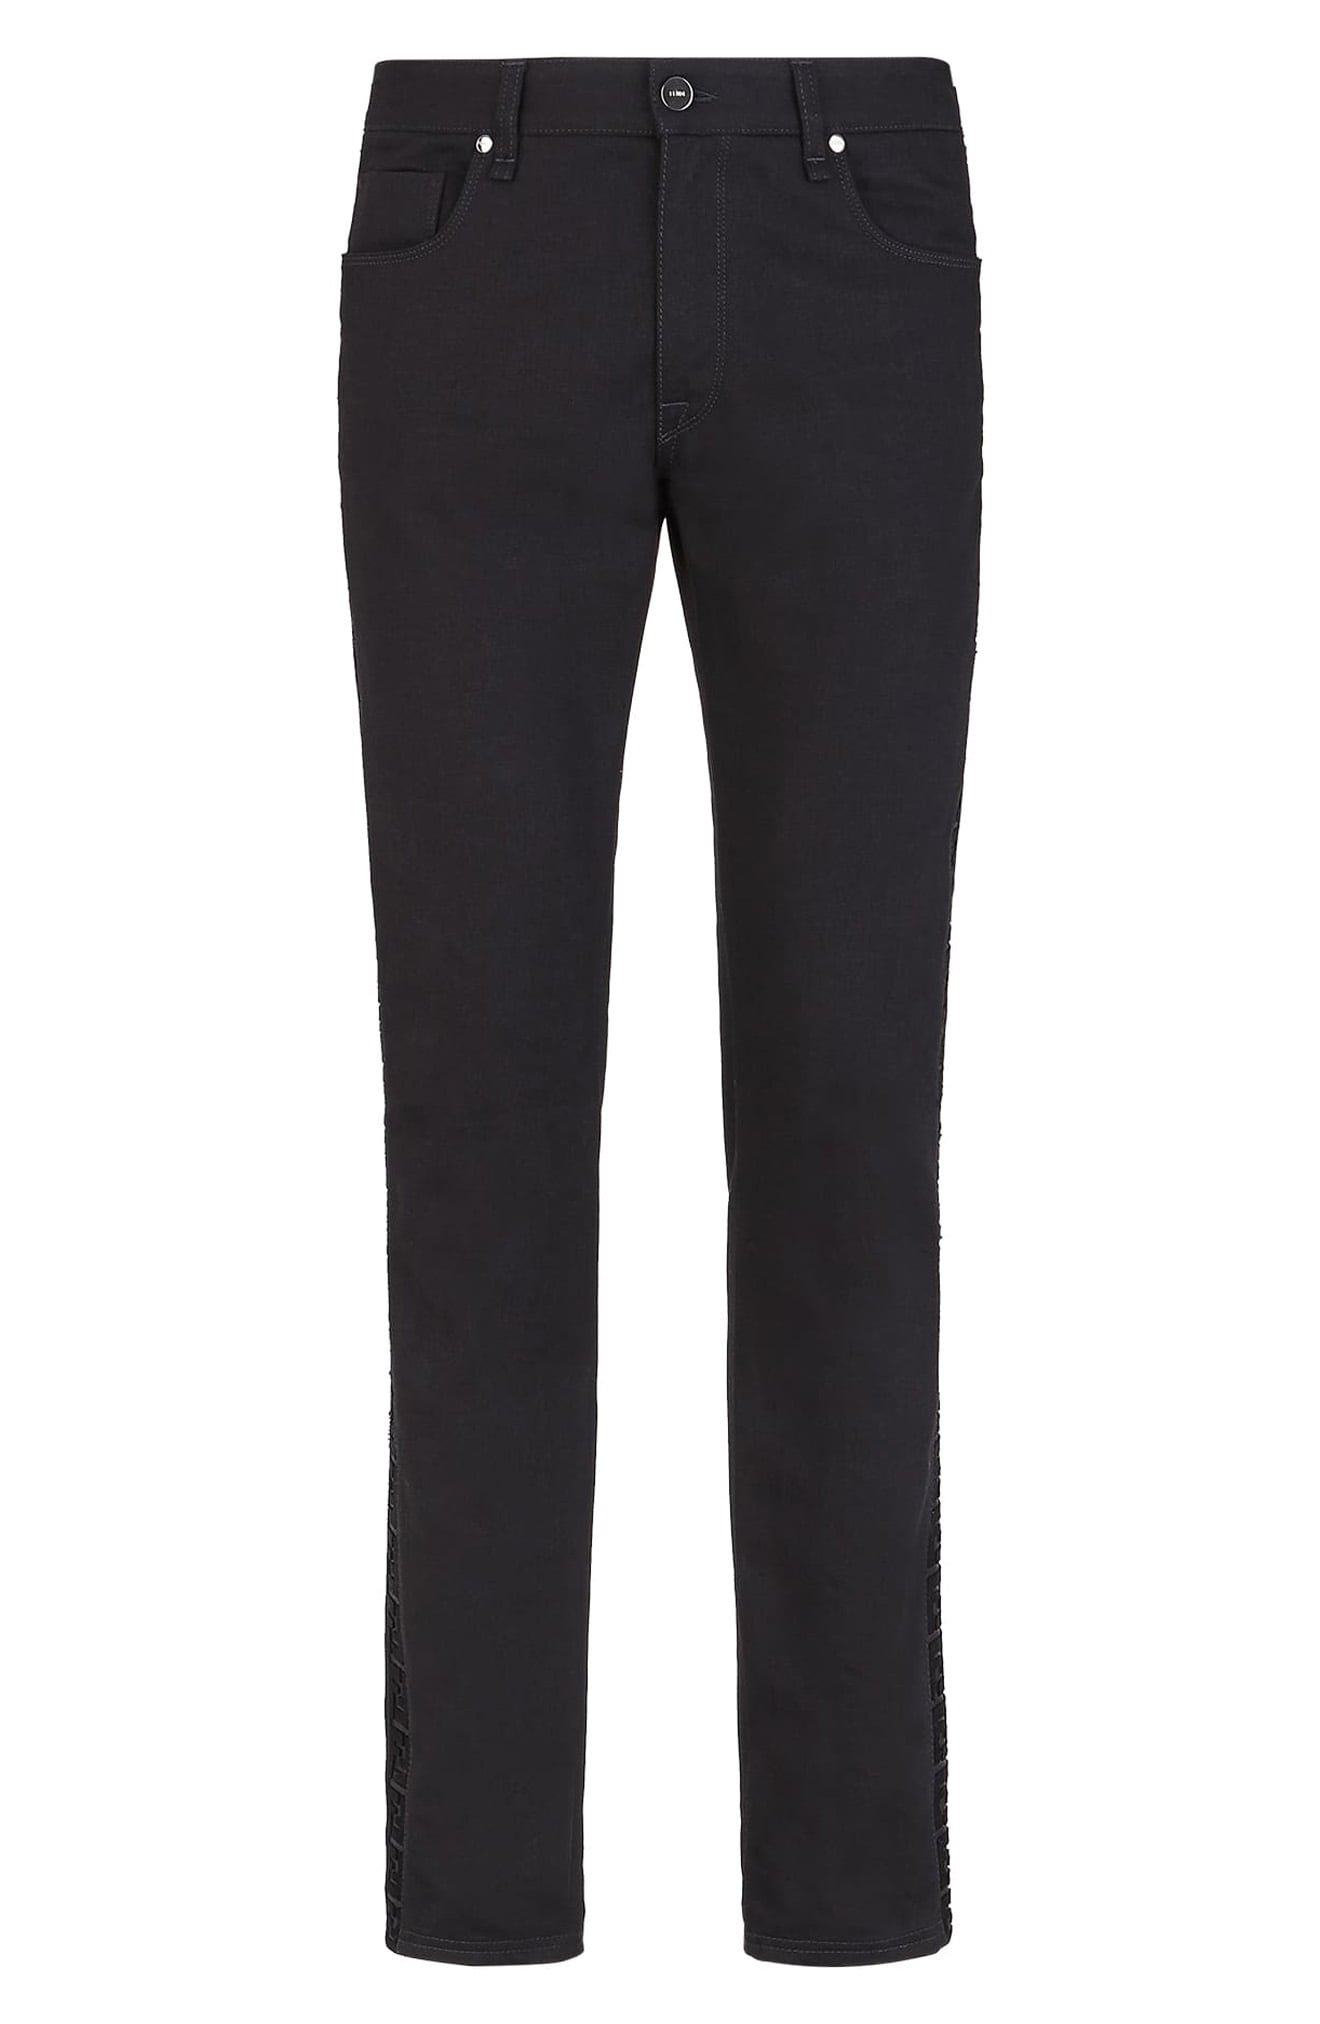 Men’s Fendi Ff Velvet Stripe Slim Fit Jeans, Size 32 - Black | The ...